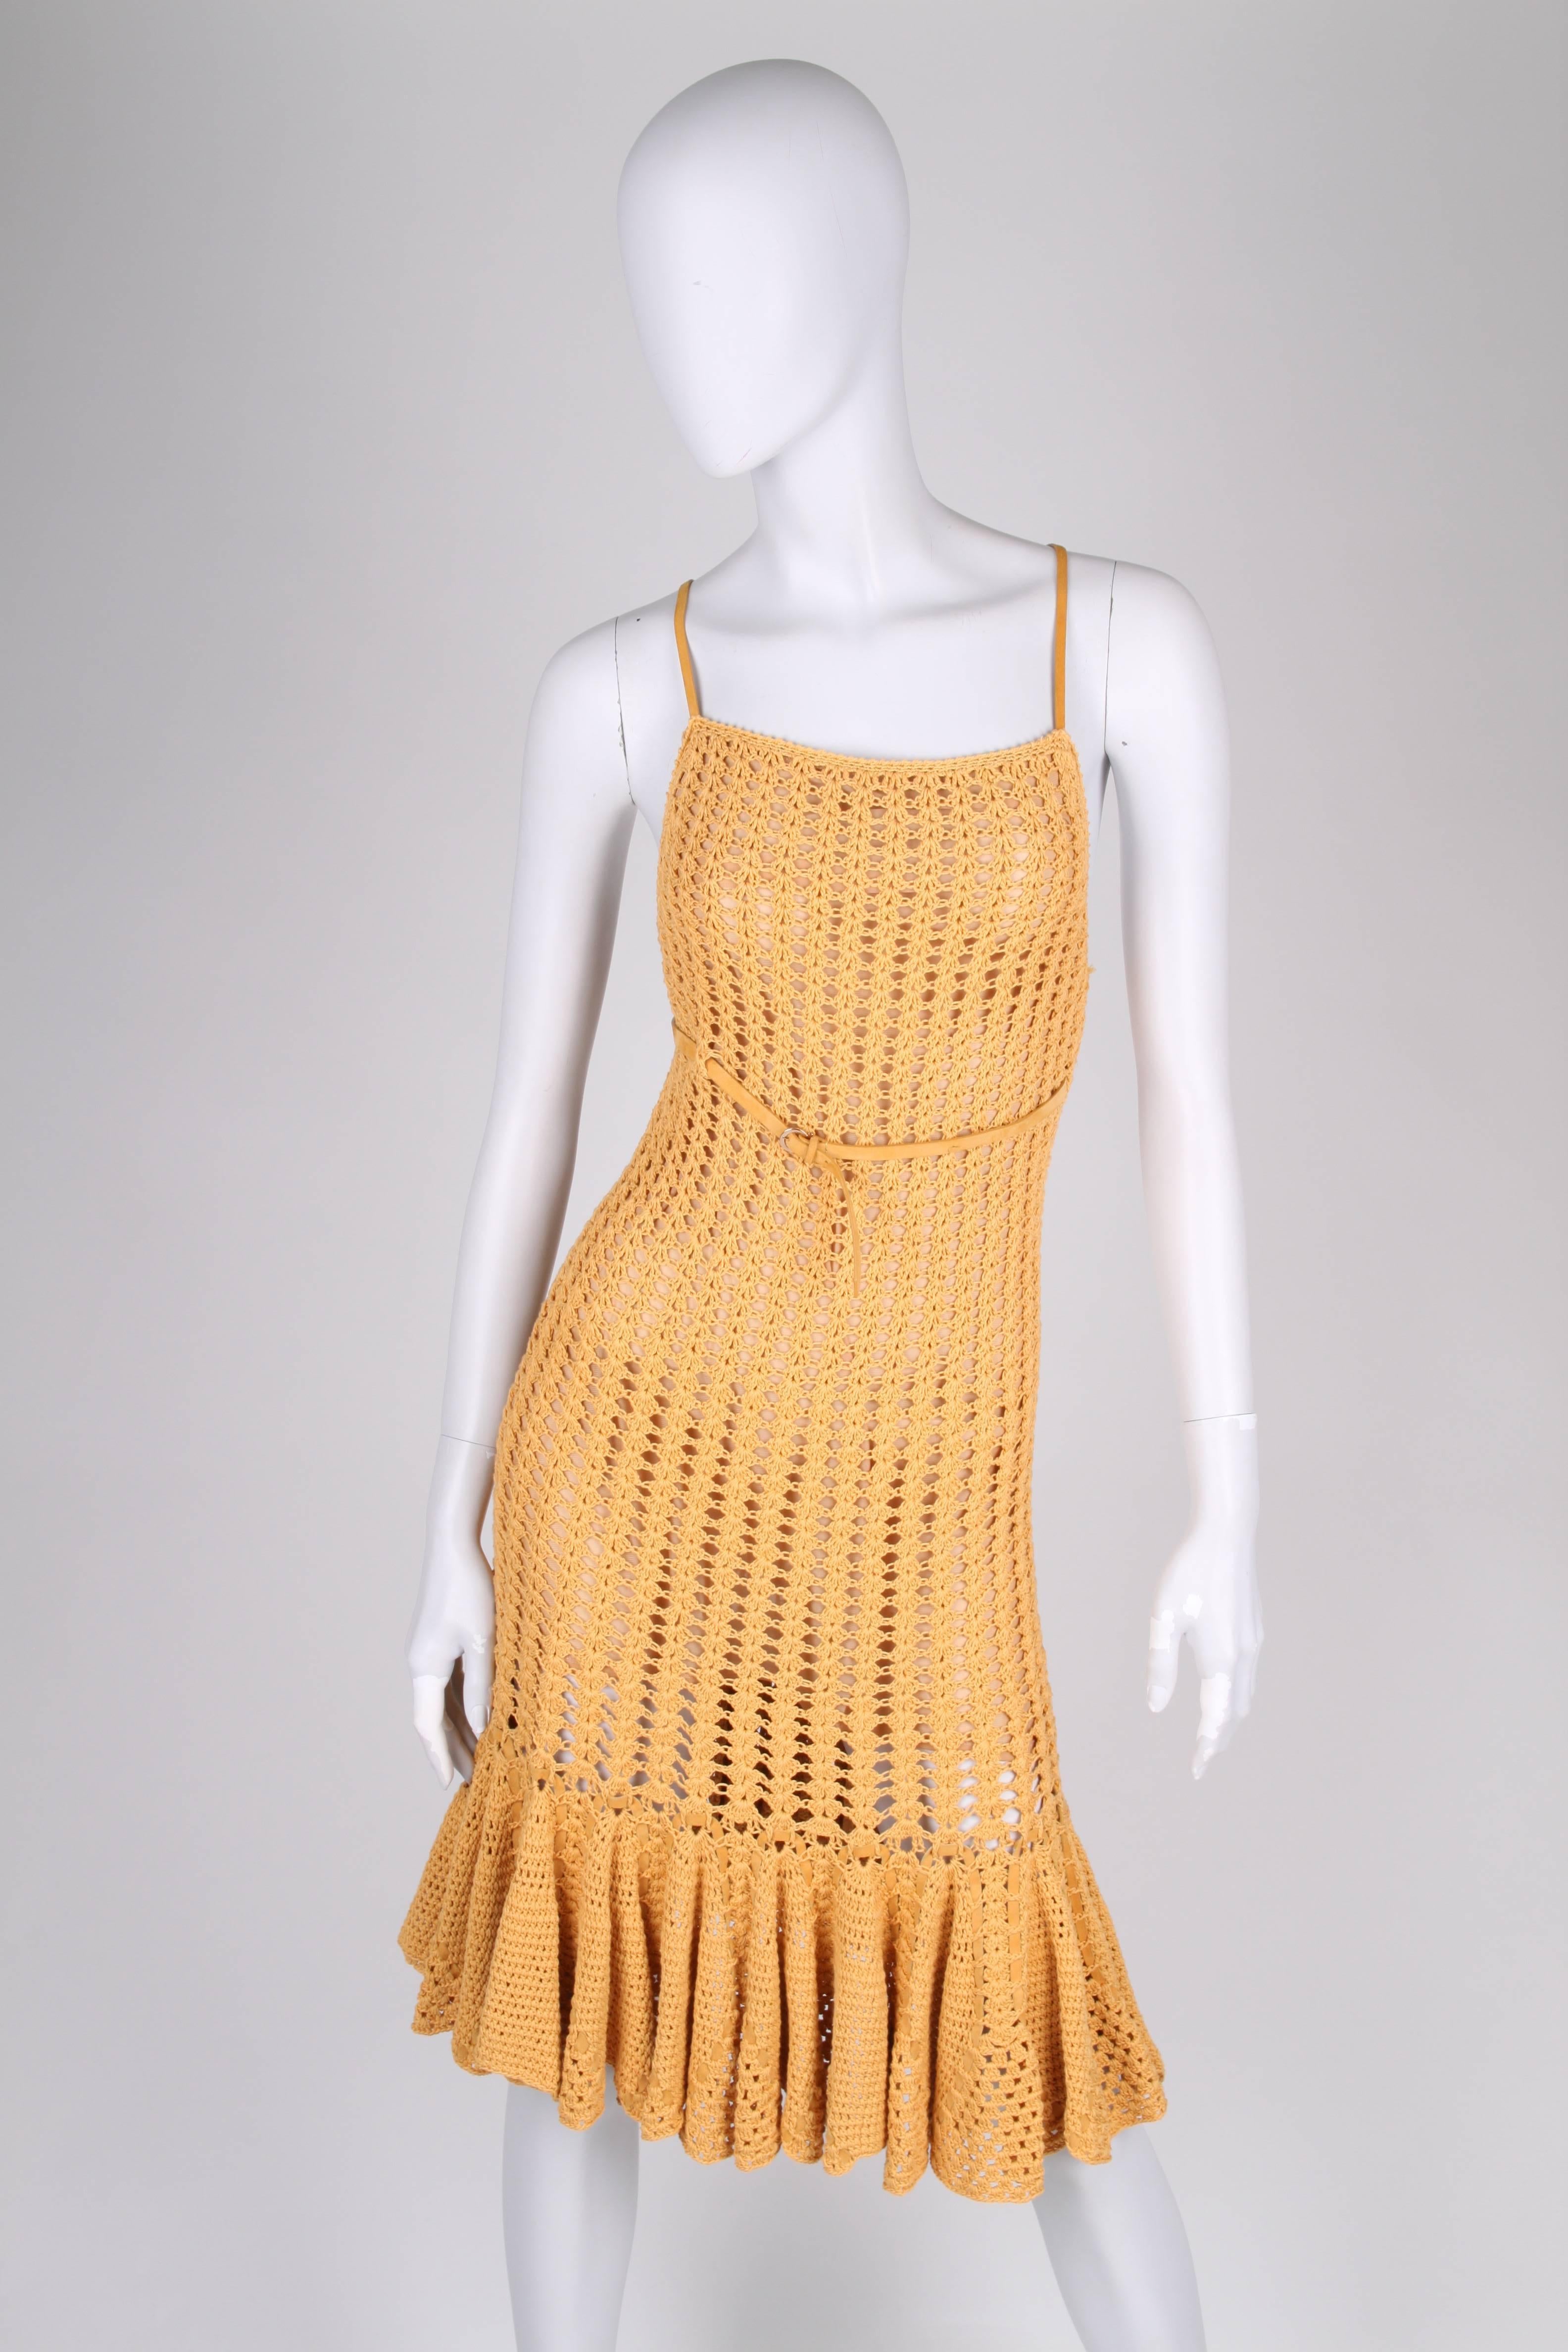 Salvatore Ferragamo Knitted Cotton Dress - mustard For Sale 1